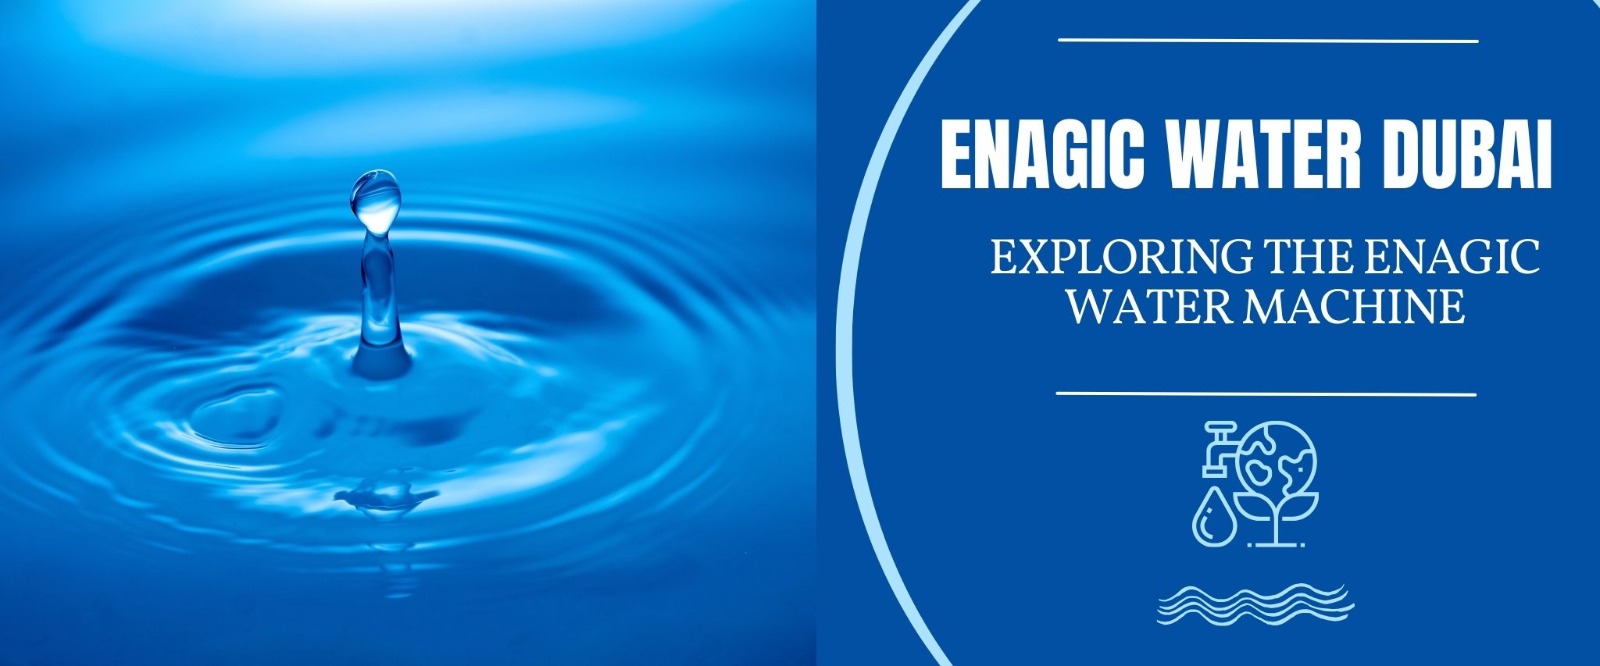 Enagic Water Dubai